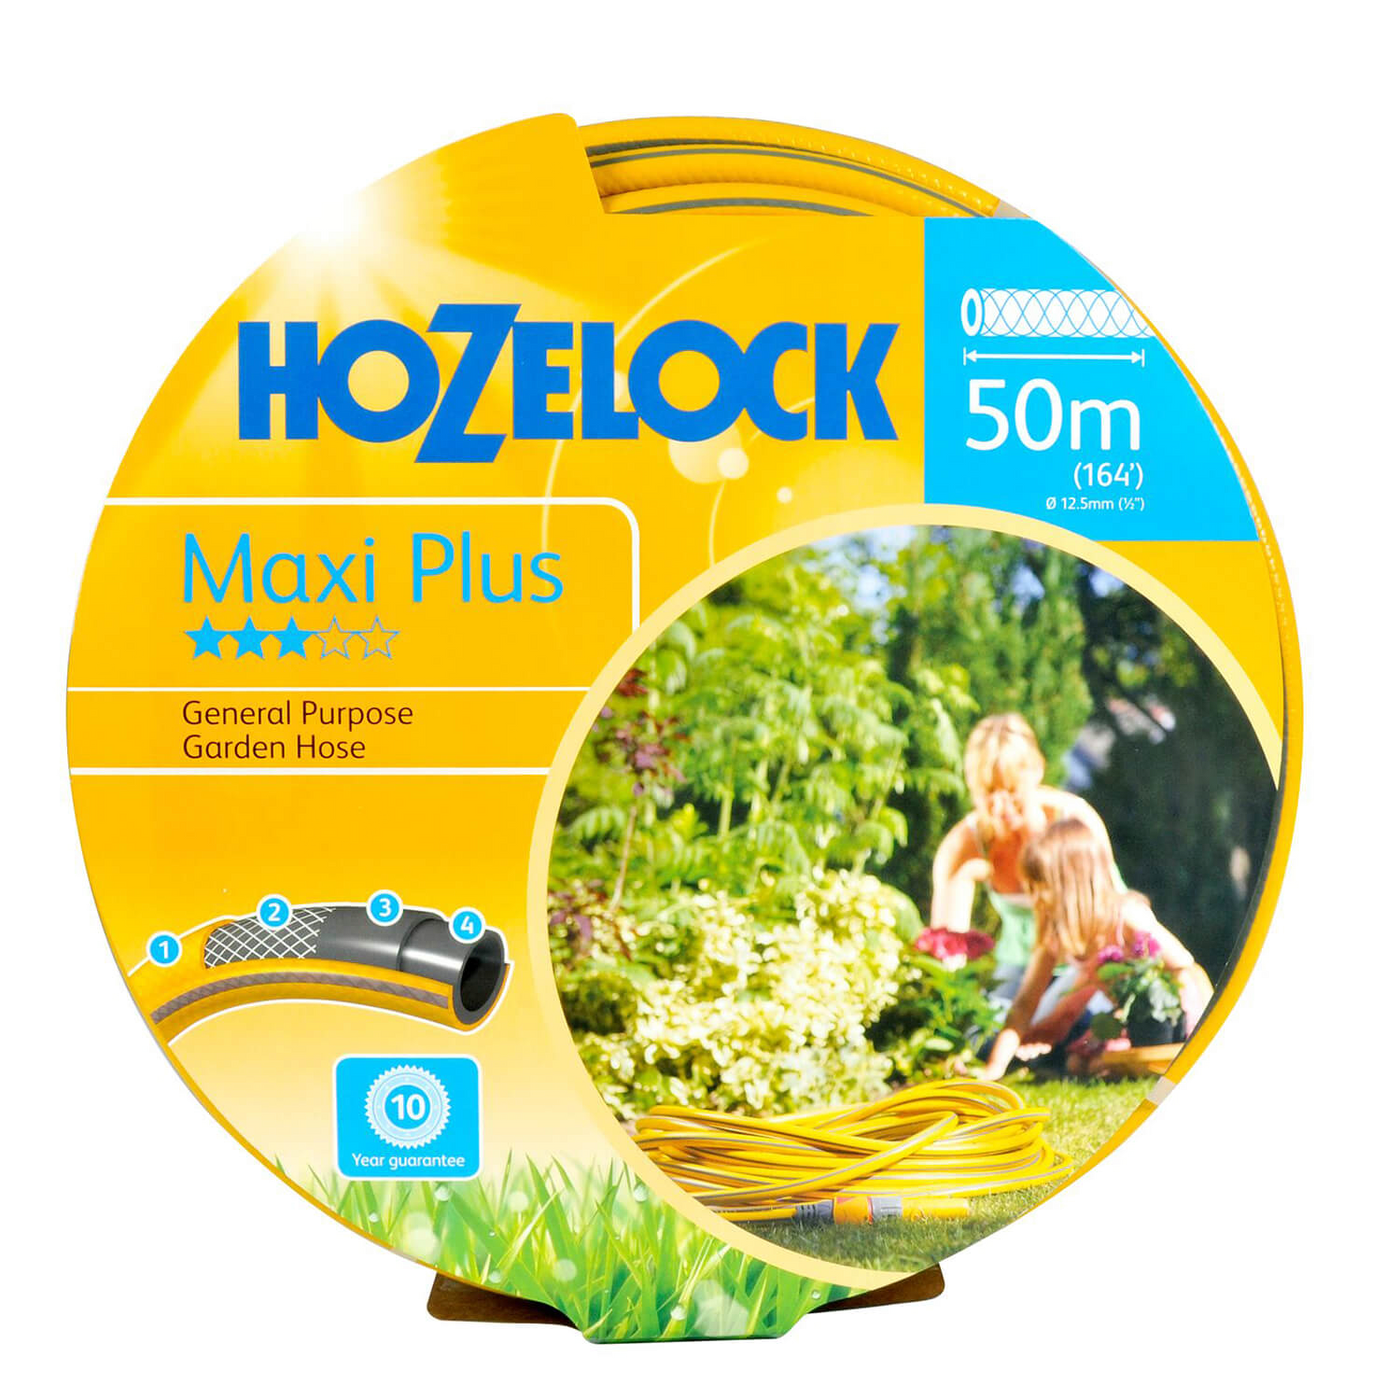 Hozelock 7250 50M Starter Hose